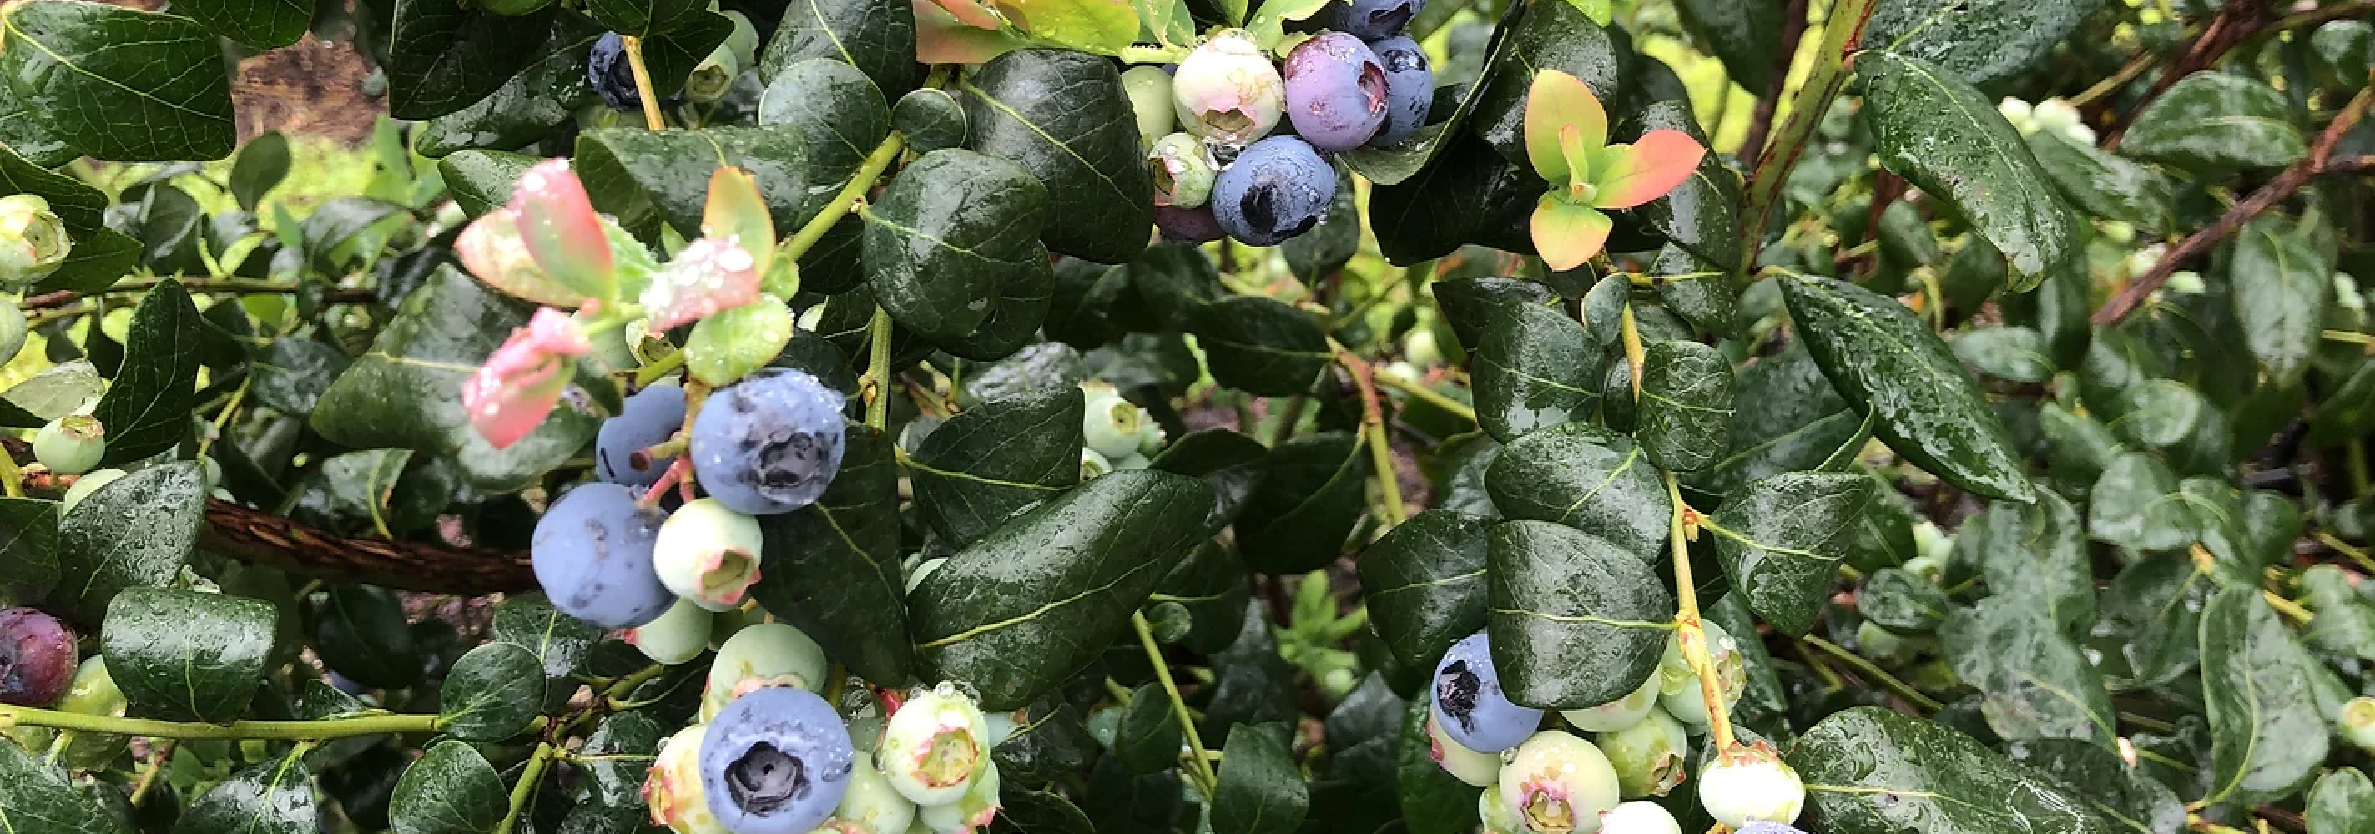 arcadia blueberry